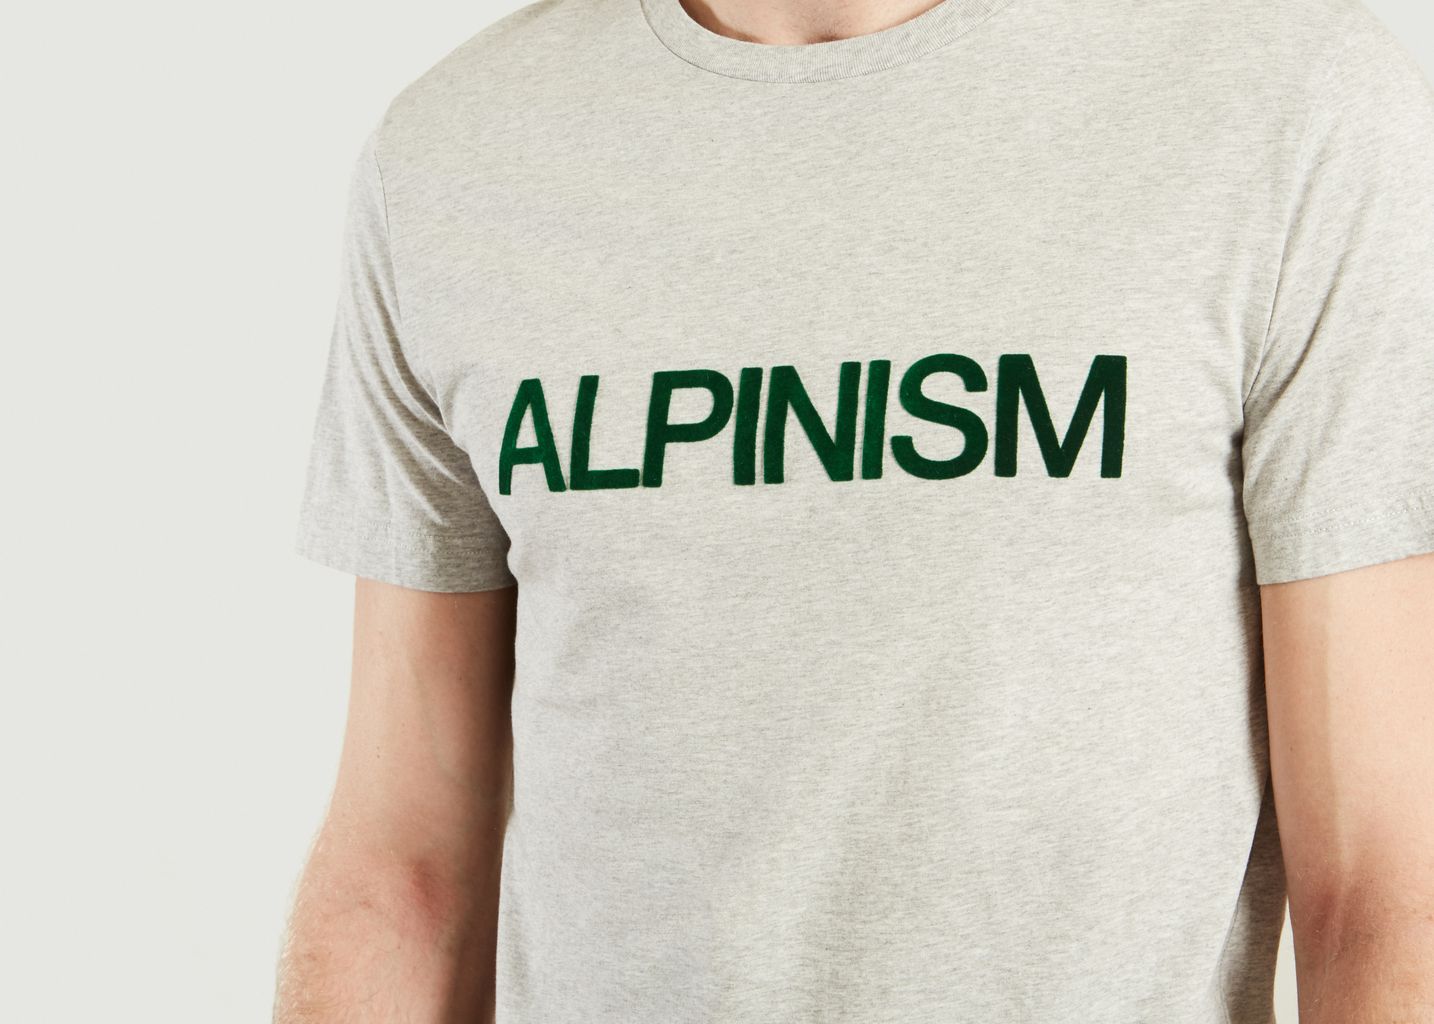 Alpinism T-shirt - Ron Dorff